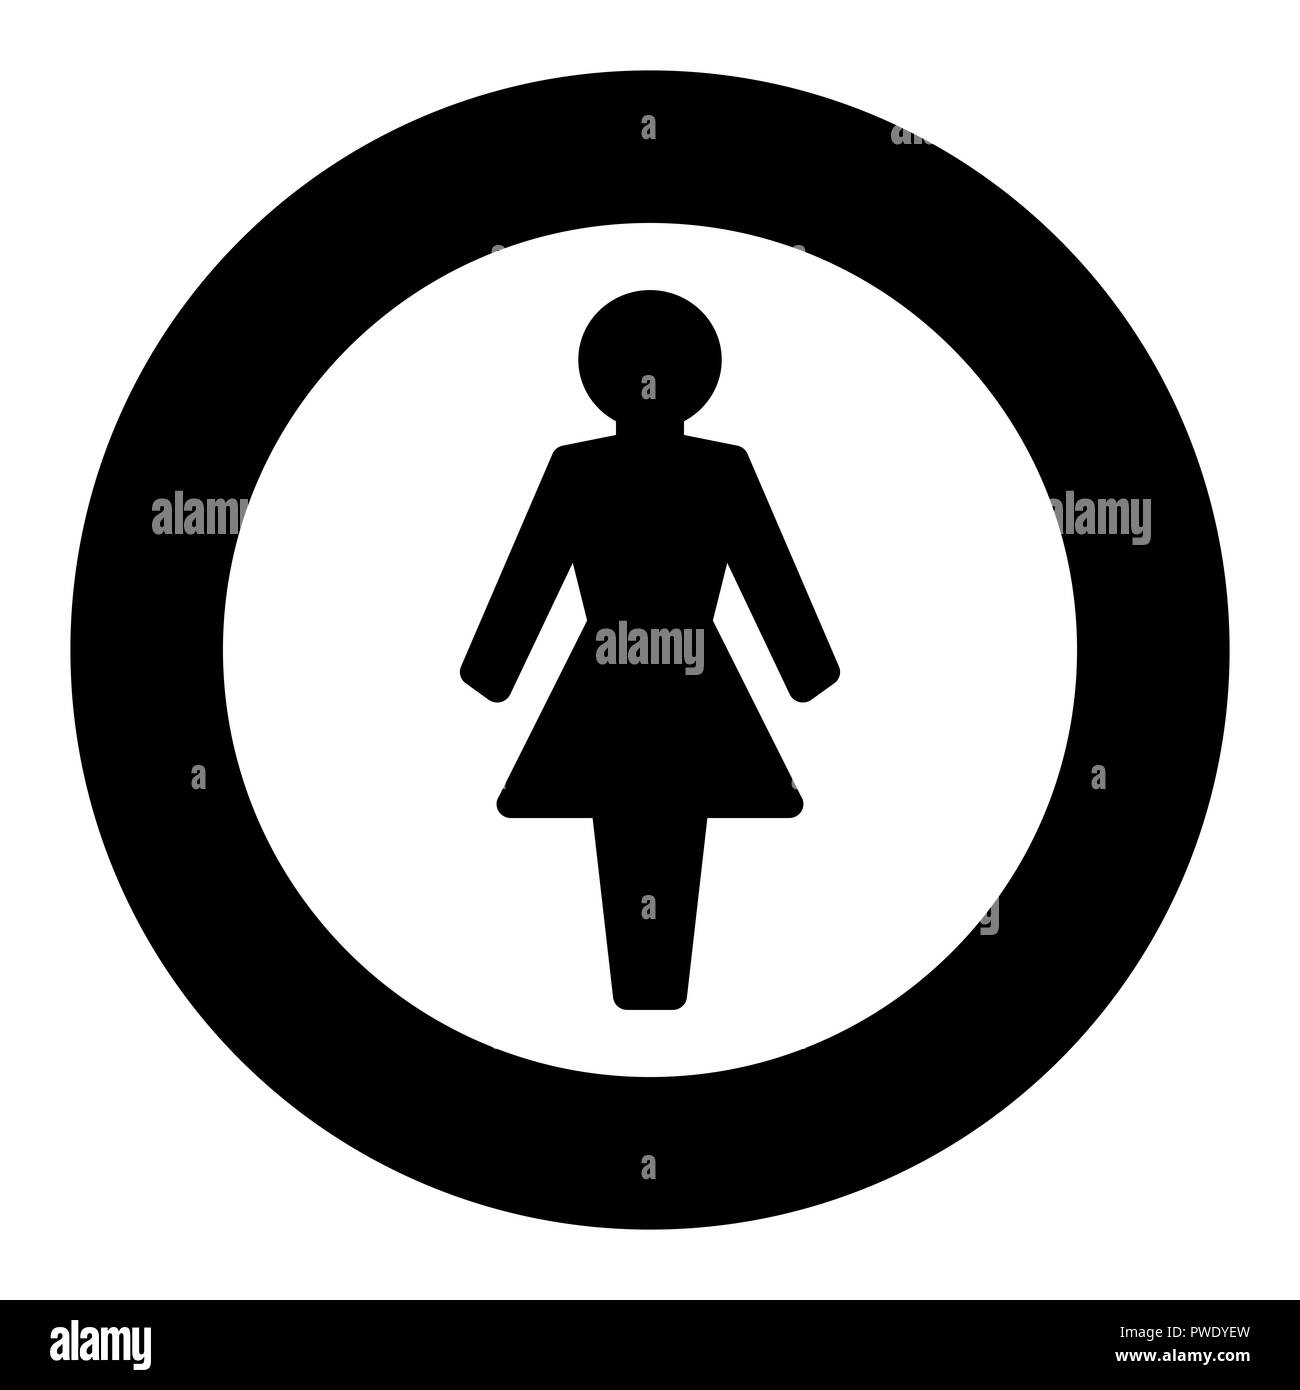 Woman logo, round black frame. Simple illustration on white background. Stock Photo